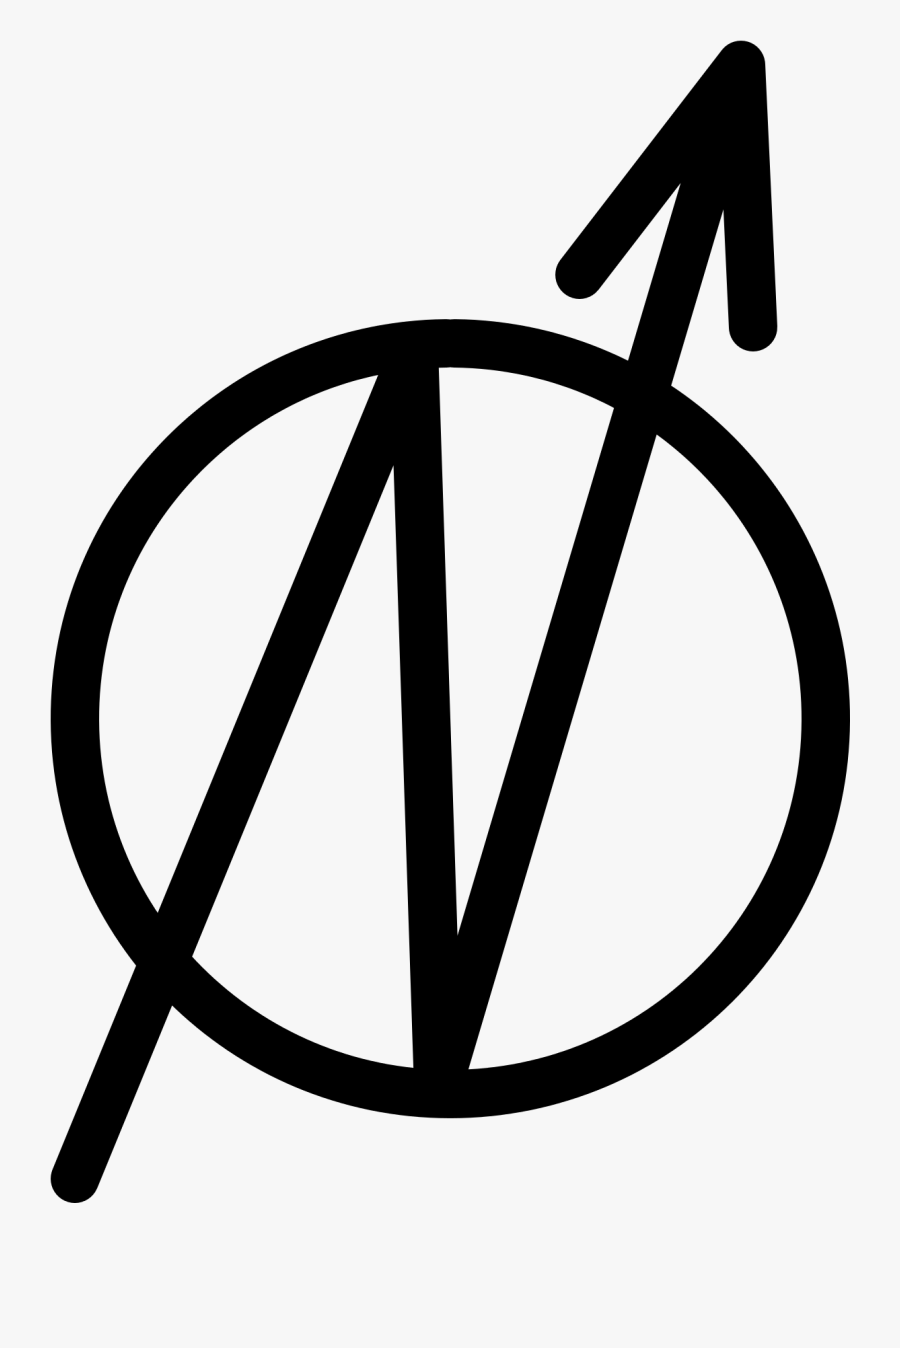 Squatting Wikipedia - Squatting Symbol, Transparent Clipart